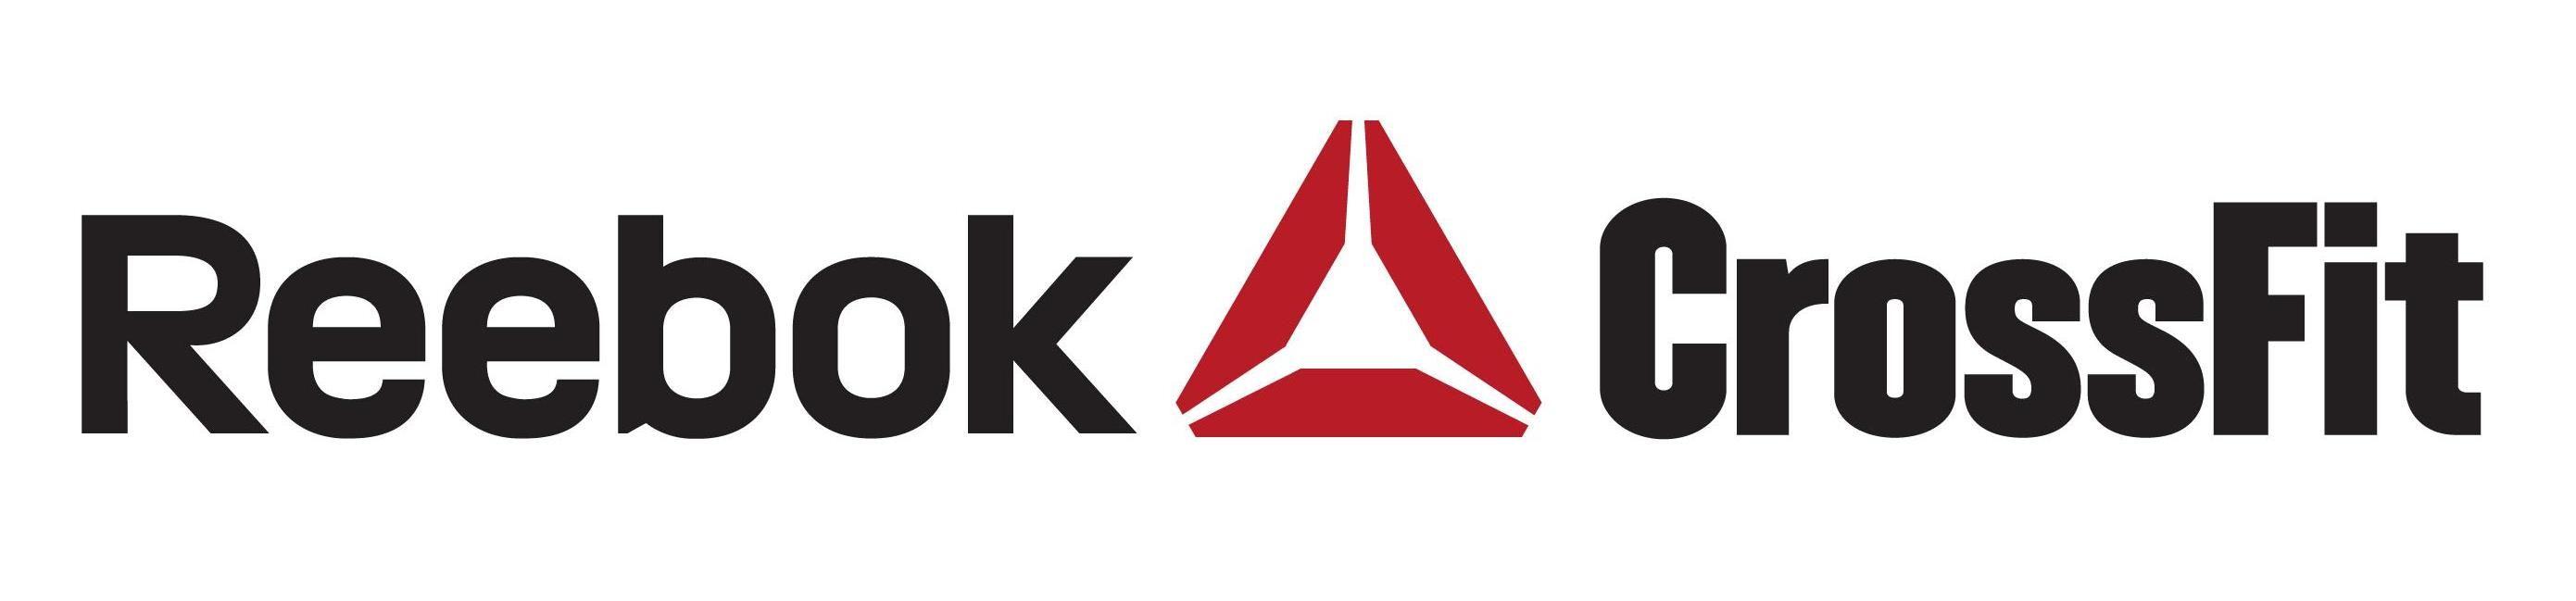 Reebok CrossFit Logo - Reebok CrossFit | Paleo Performance logo Insp | Fitness, Crossfit ...